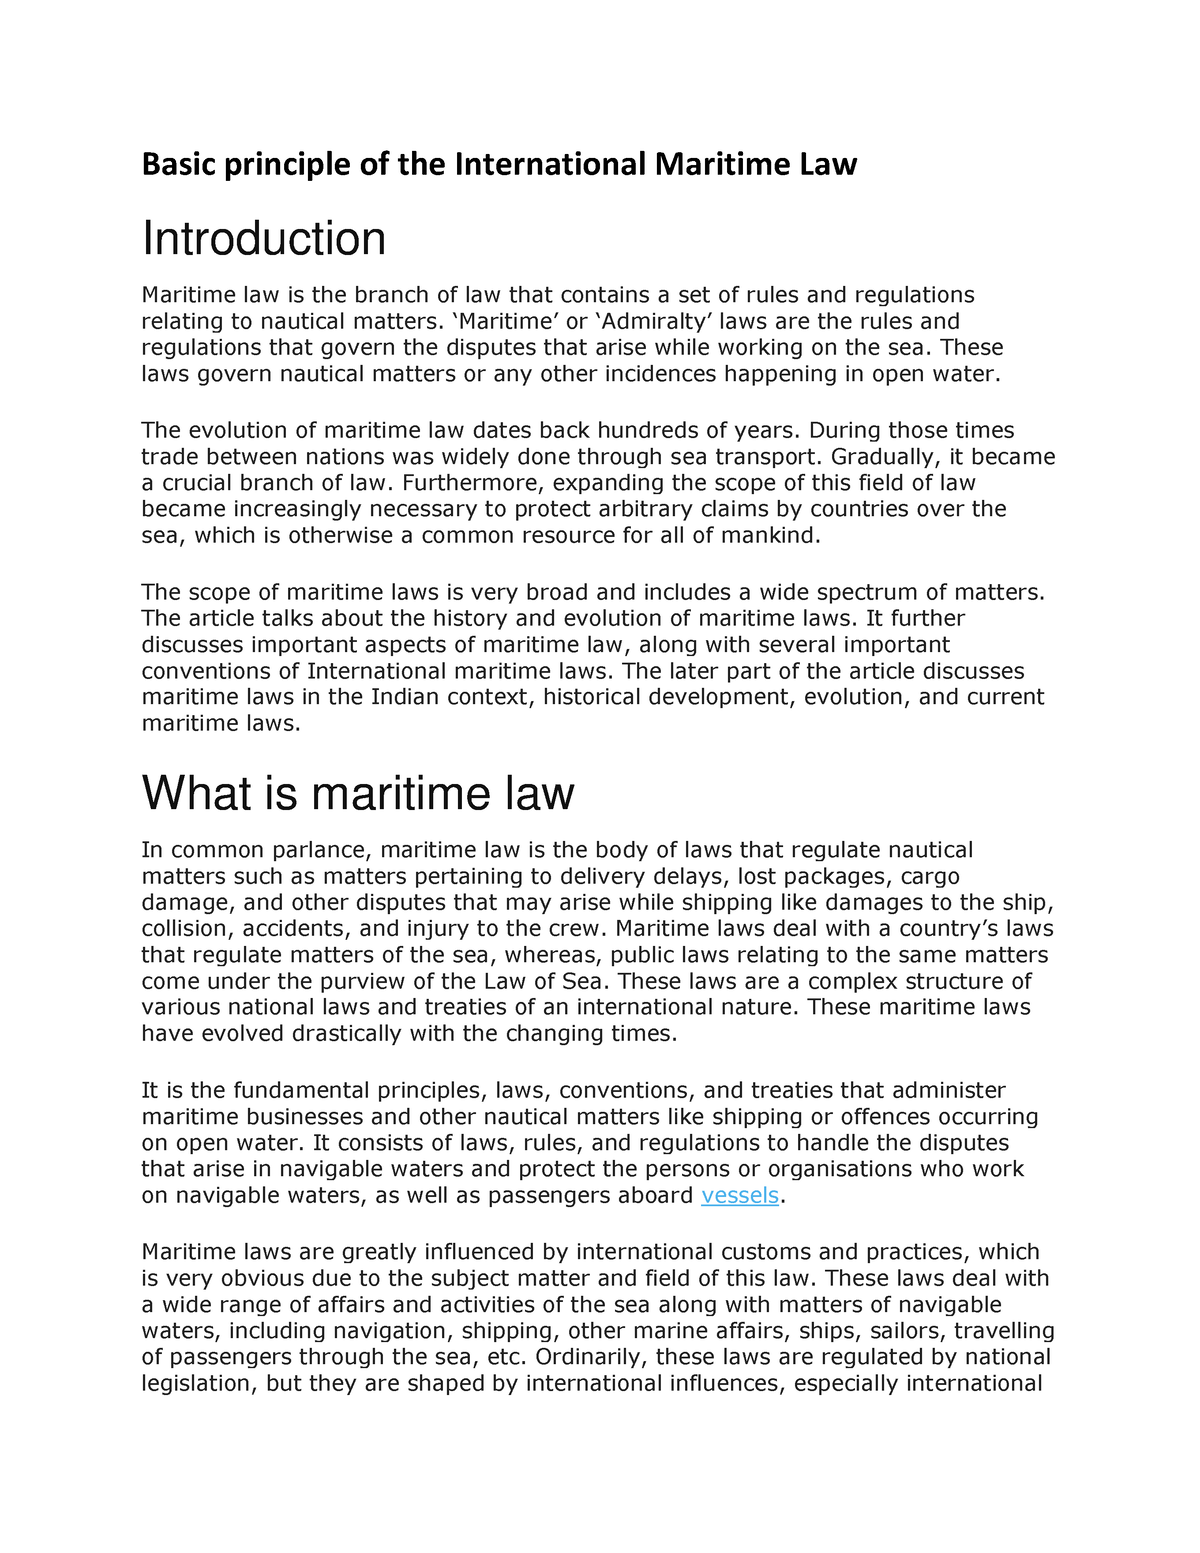 International Law Assignment - Basic principle of the International ...